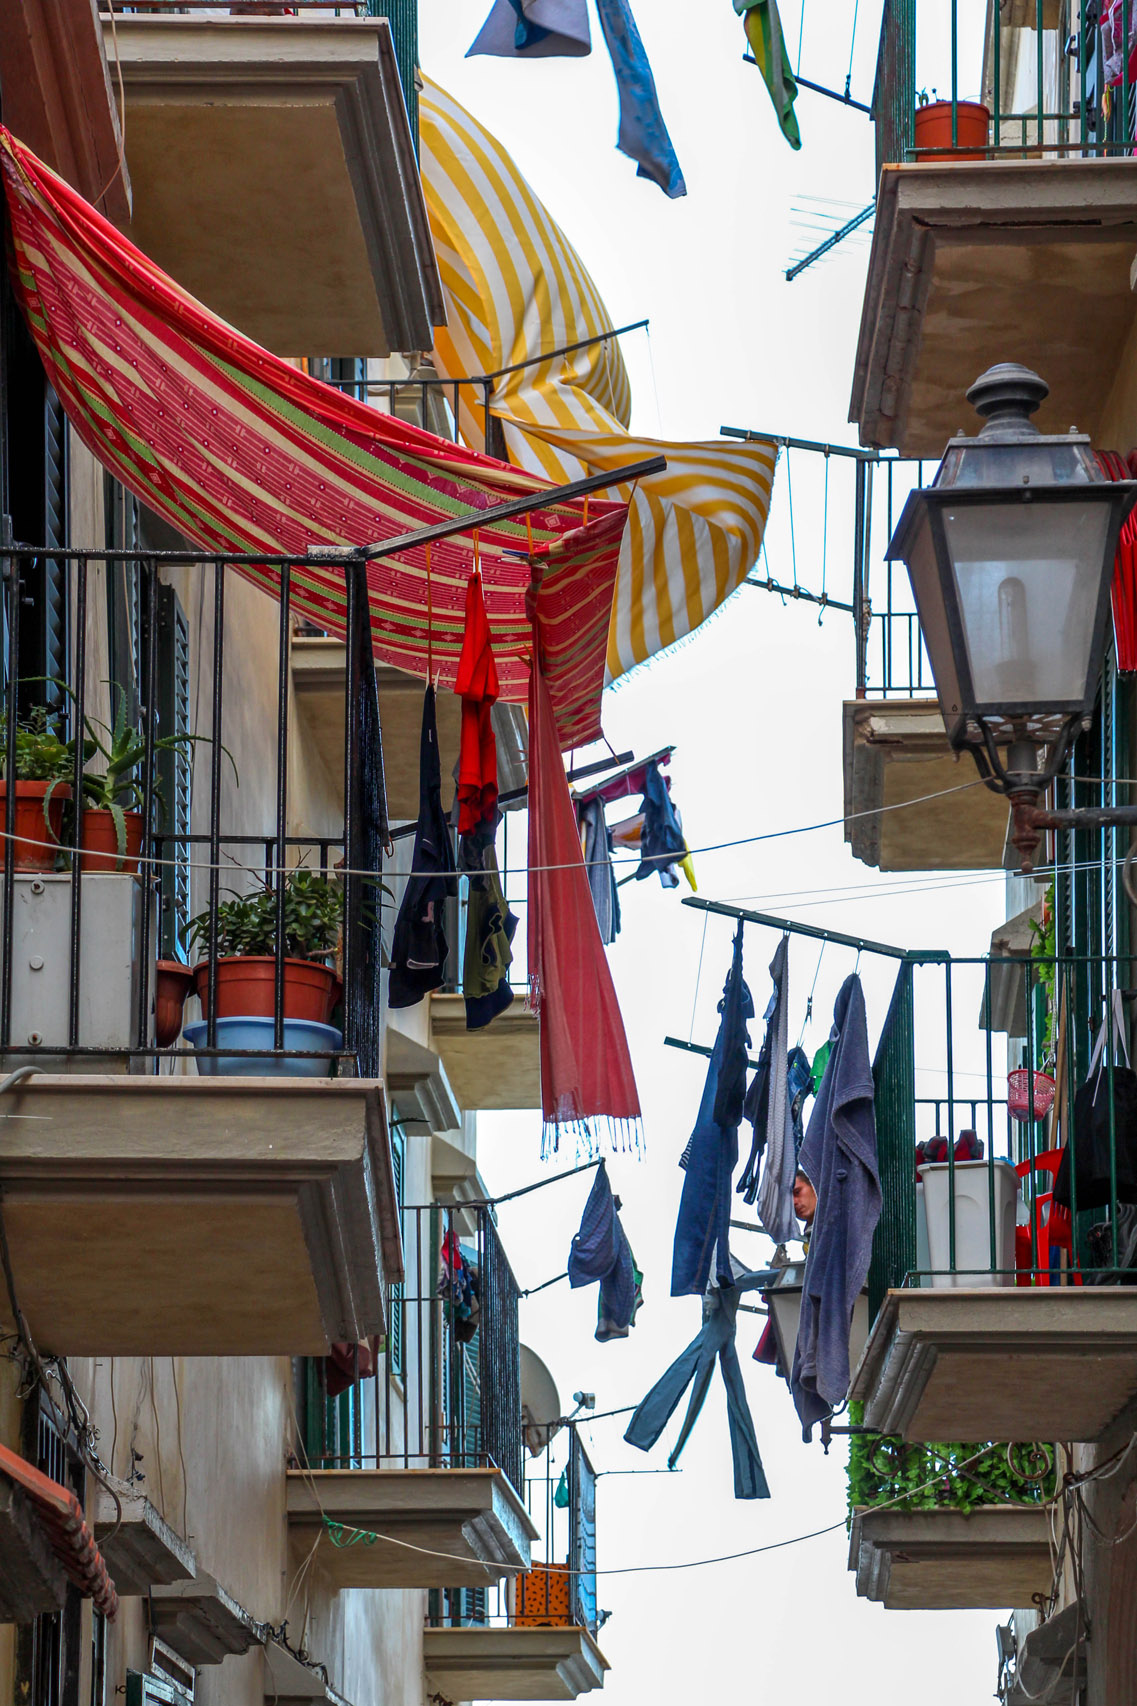 The balconies of Vieste, Italy